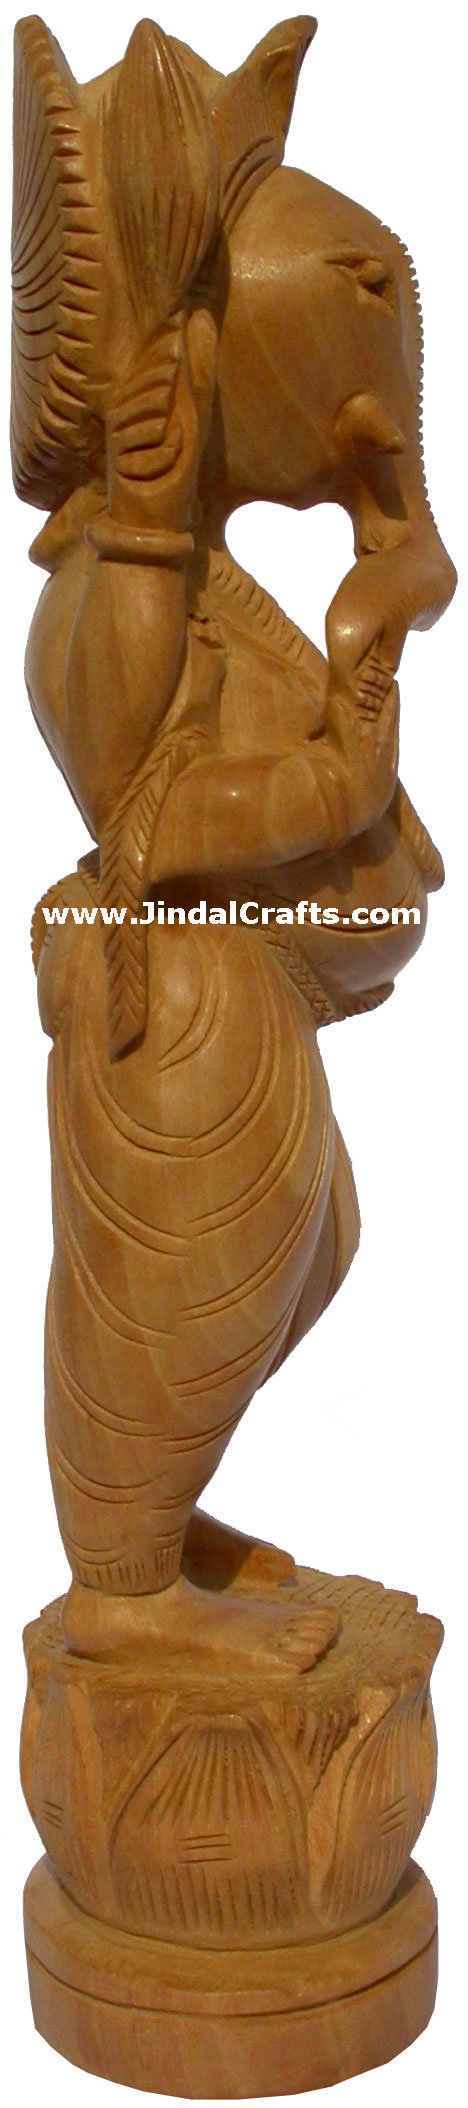 Handmade Ganesha Wooden Sculpture Statuette Indian Hindu Idol Carving Art Crafts